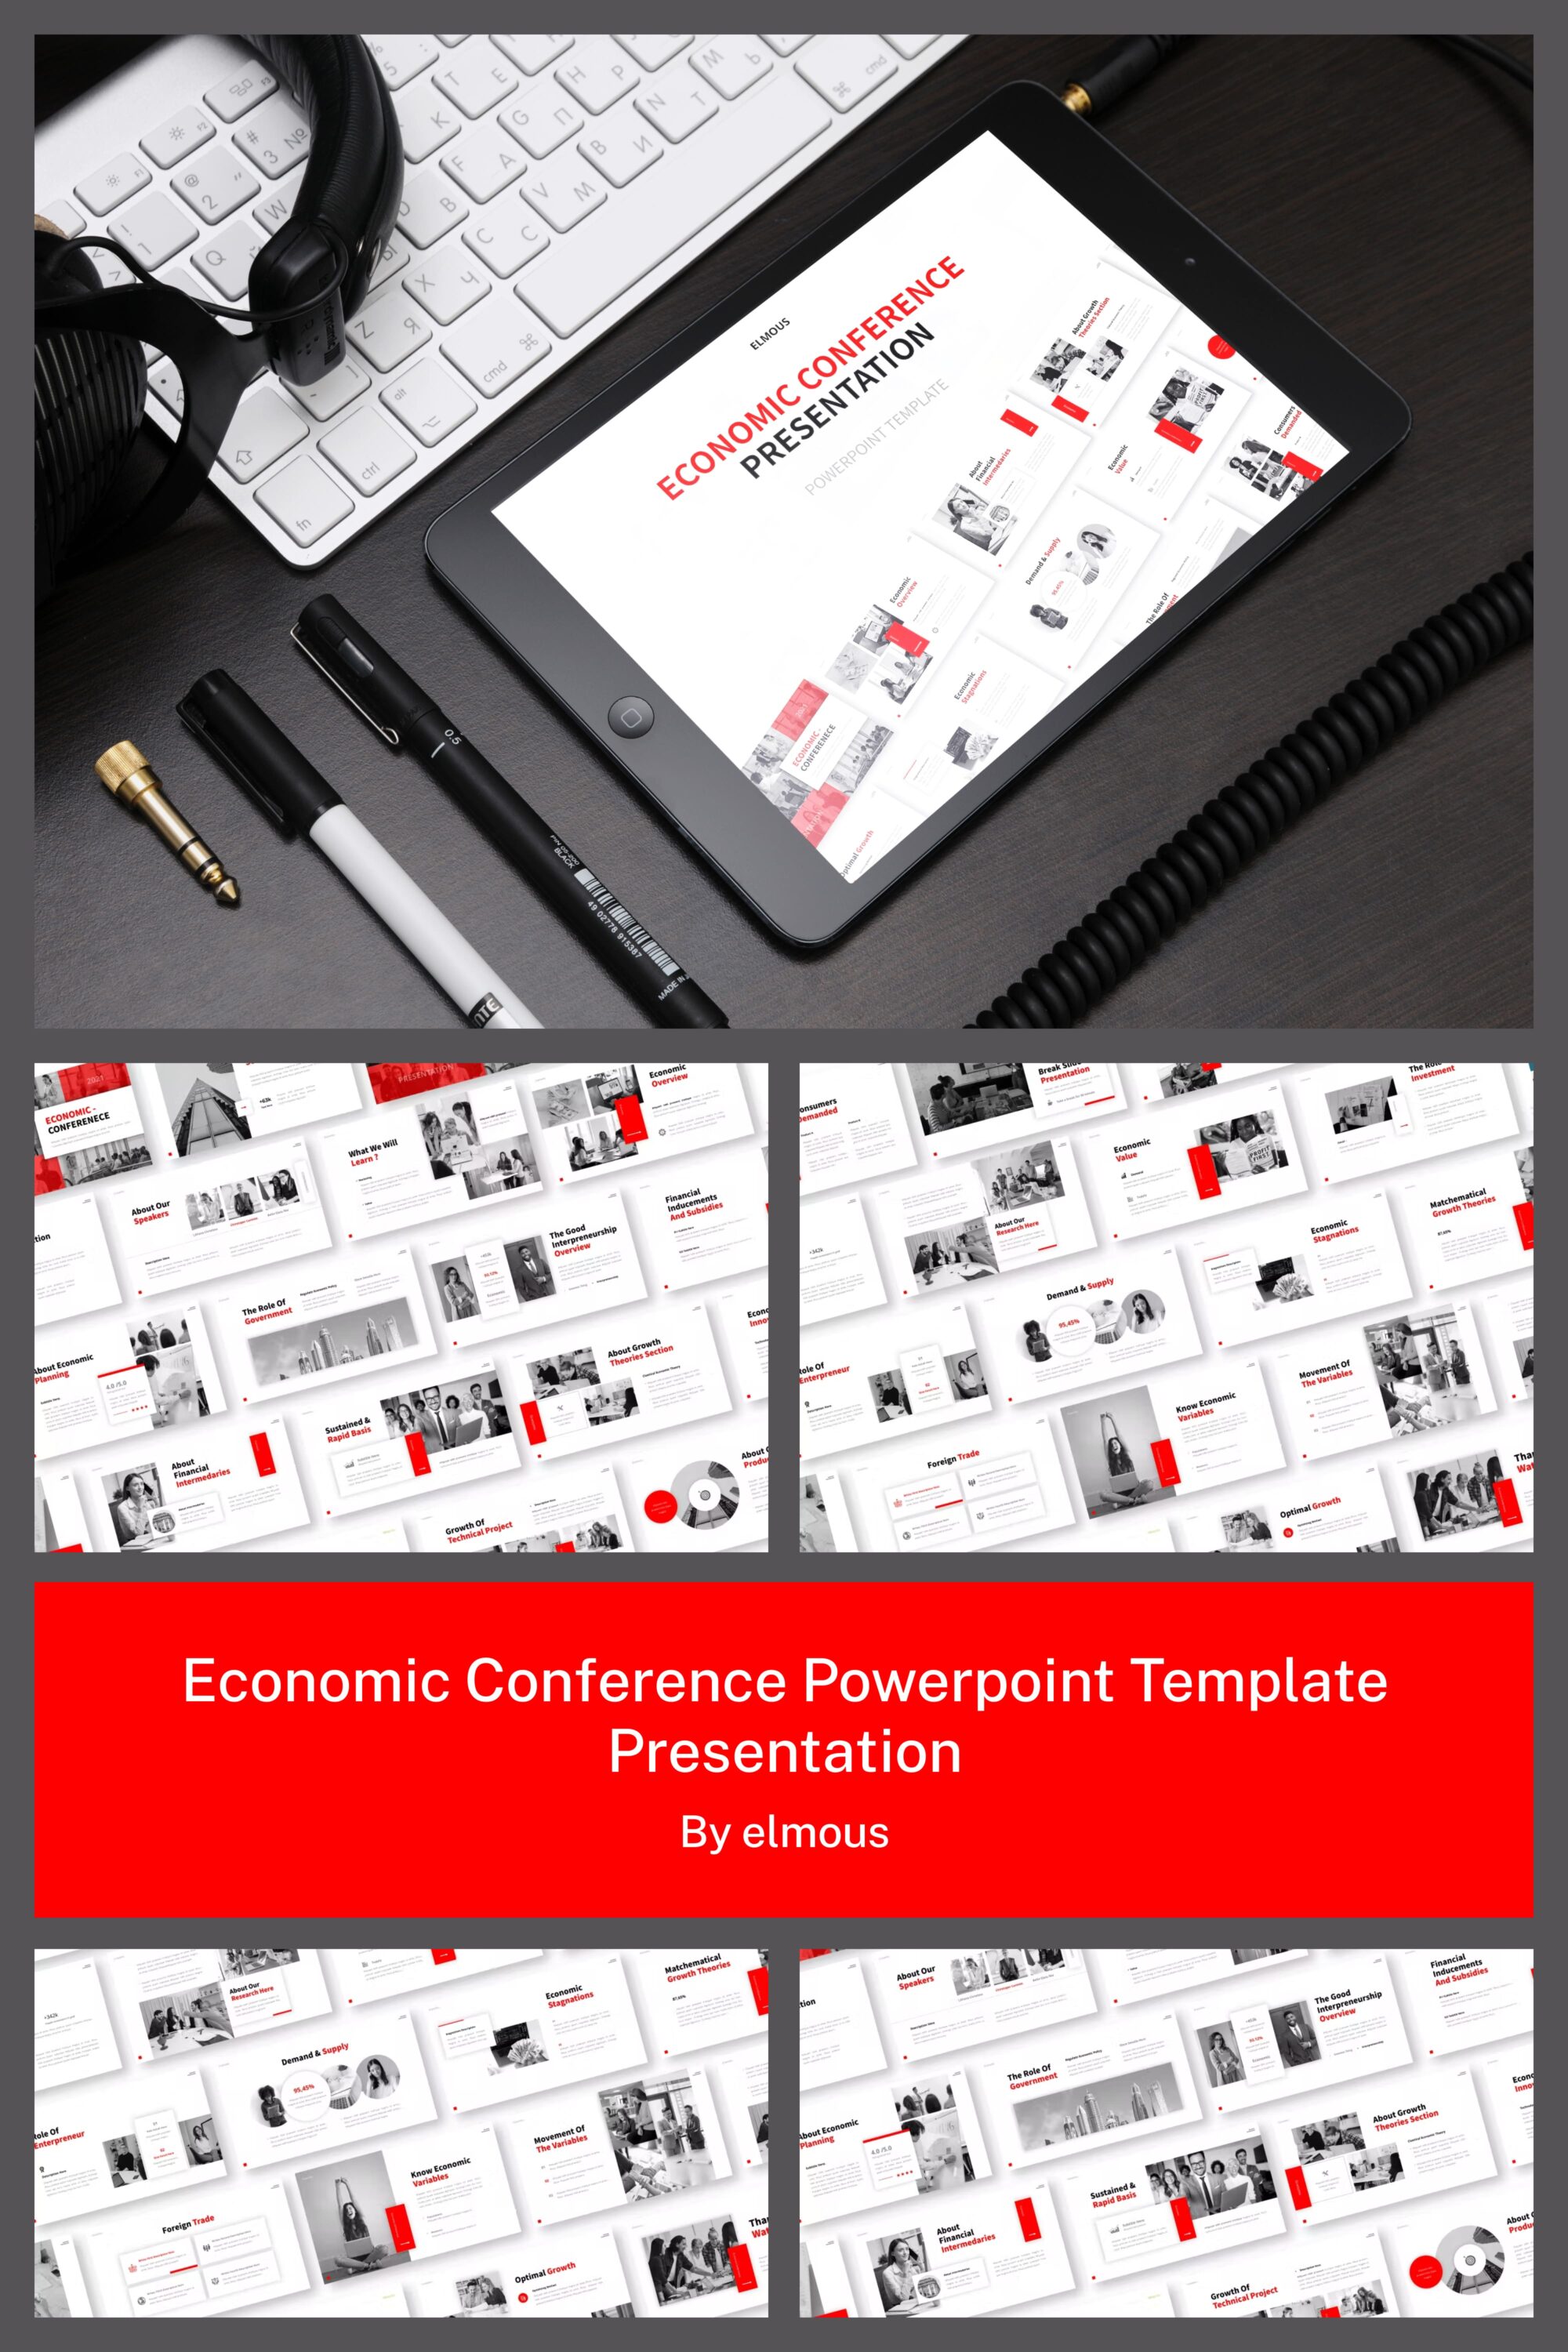 Economic conference powerpoint template presentation pinterest images.